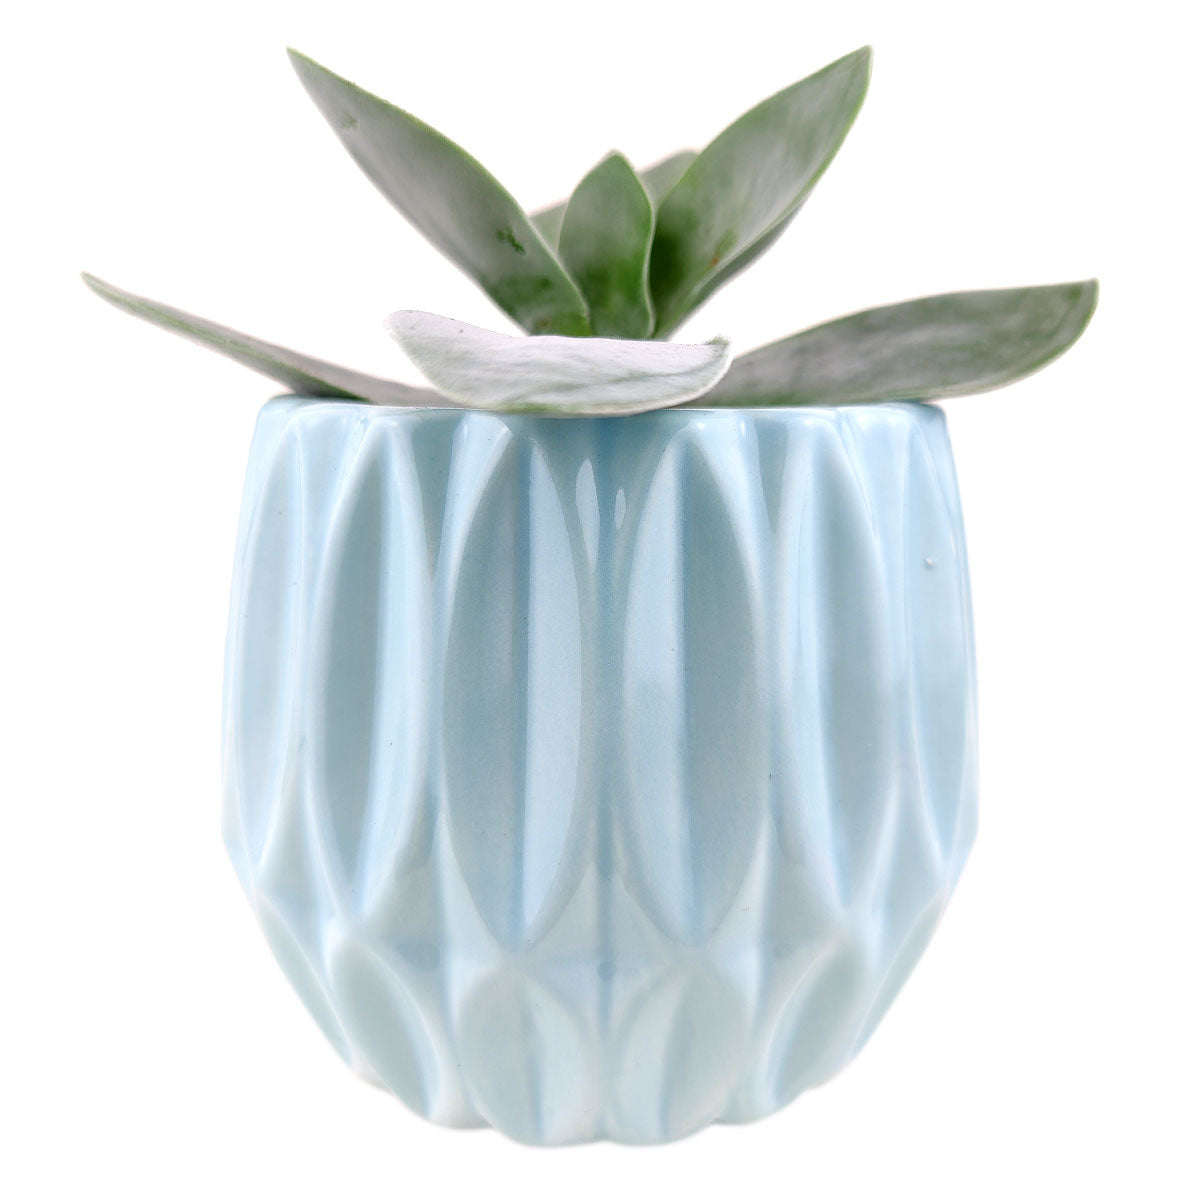 Blue Optical Pot for sale, ceramic vase for home decor, ceramic succulent and cactus pots for sale, Succulent gift ideas